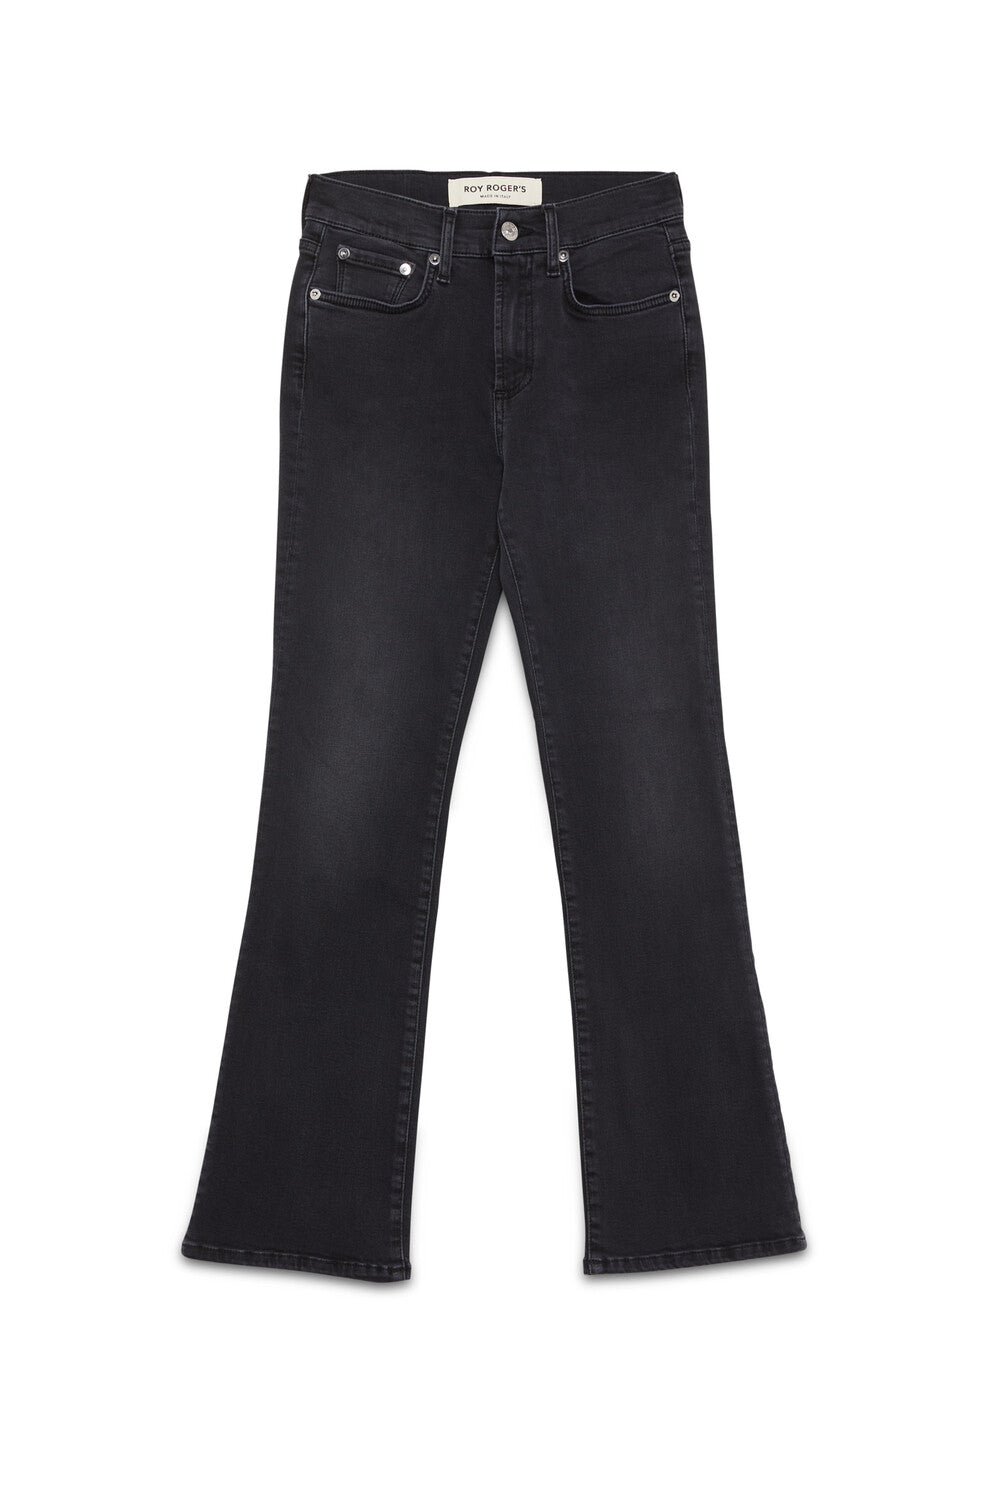 Roy Rogers Jeans donna Zandra Hem woman - soft denim black stretch